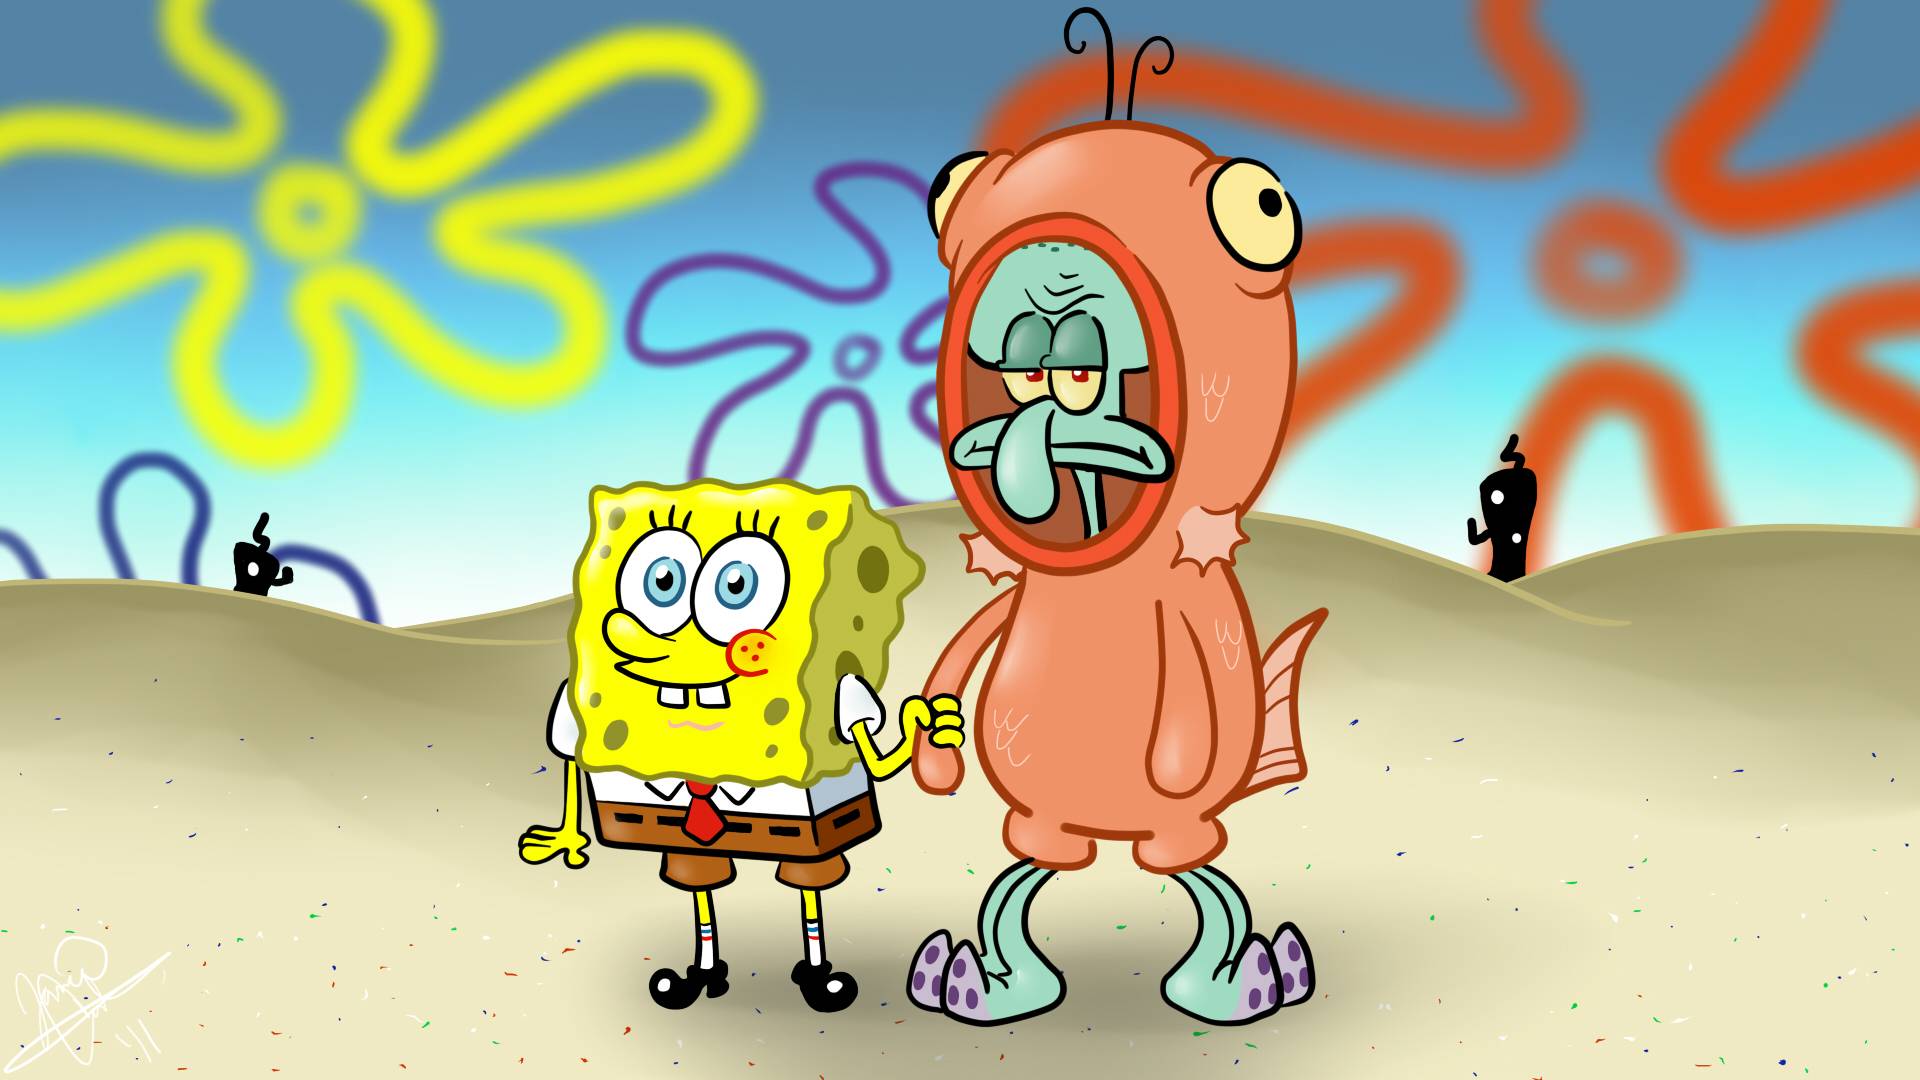 Spongebob and Squidward Square Pants Wallpaper